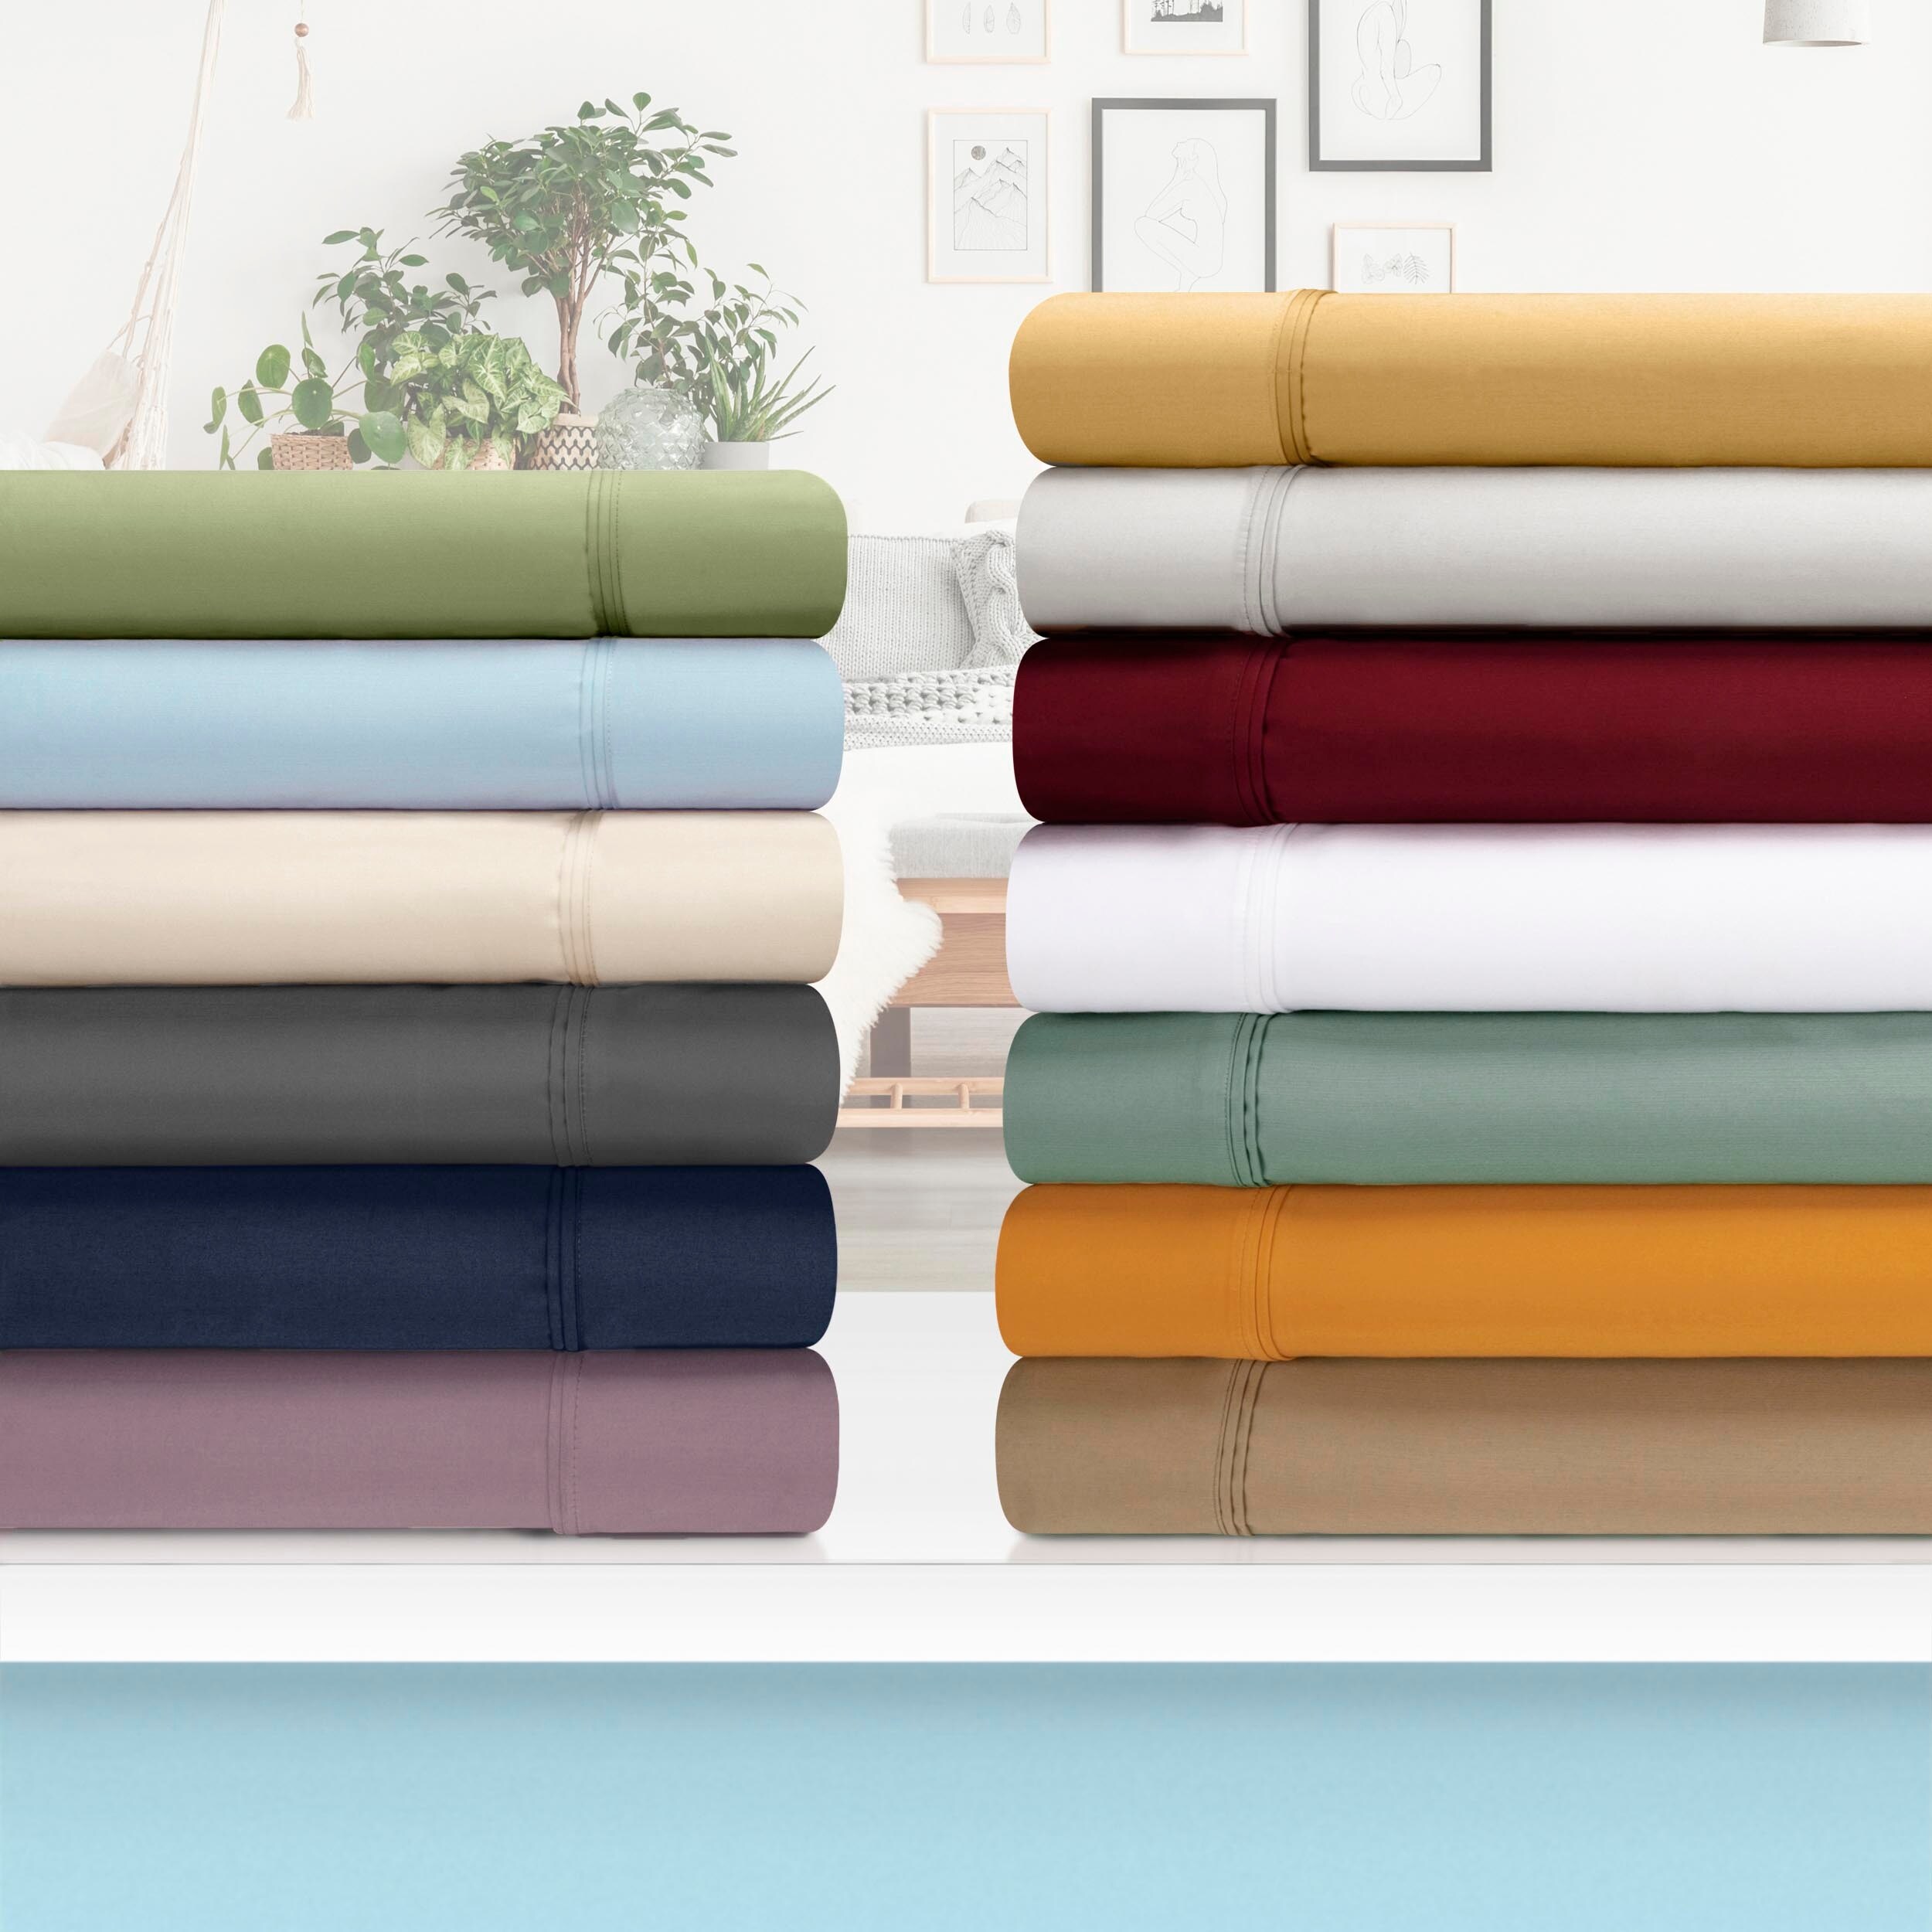 Details about   Emperor Size 6 pc Top Quality Sheet Set 1200 TC Egyptian Cotton Multi Colors 